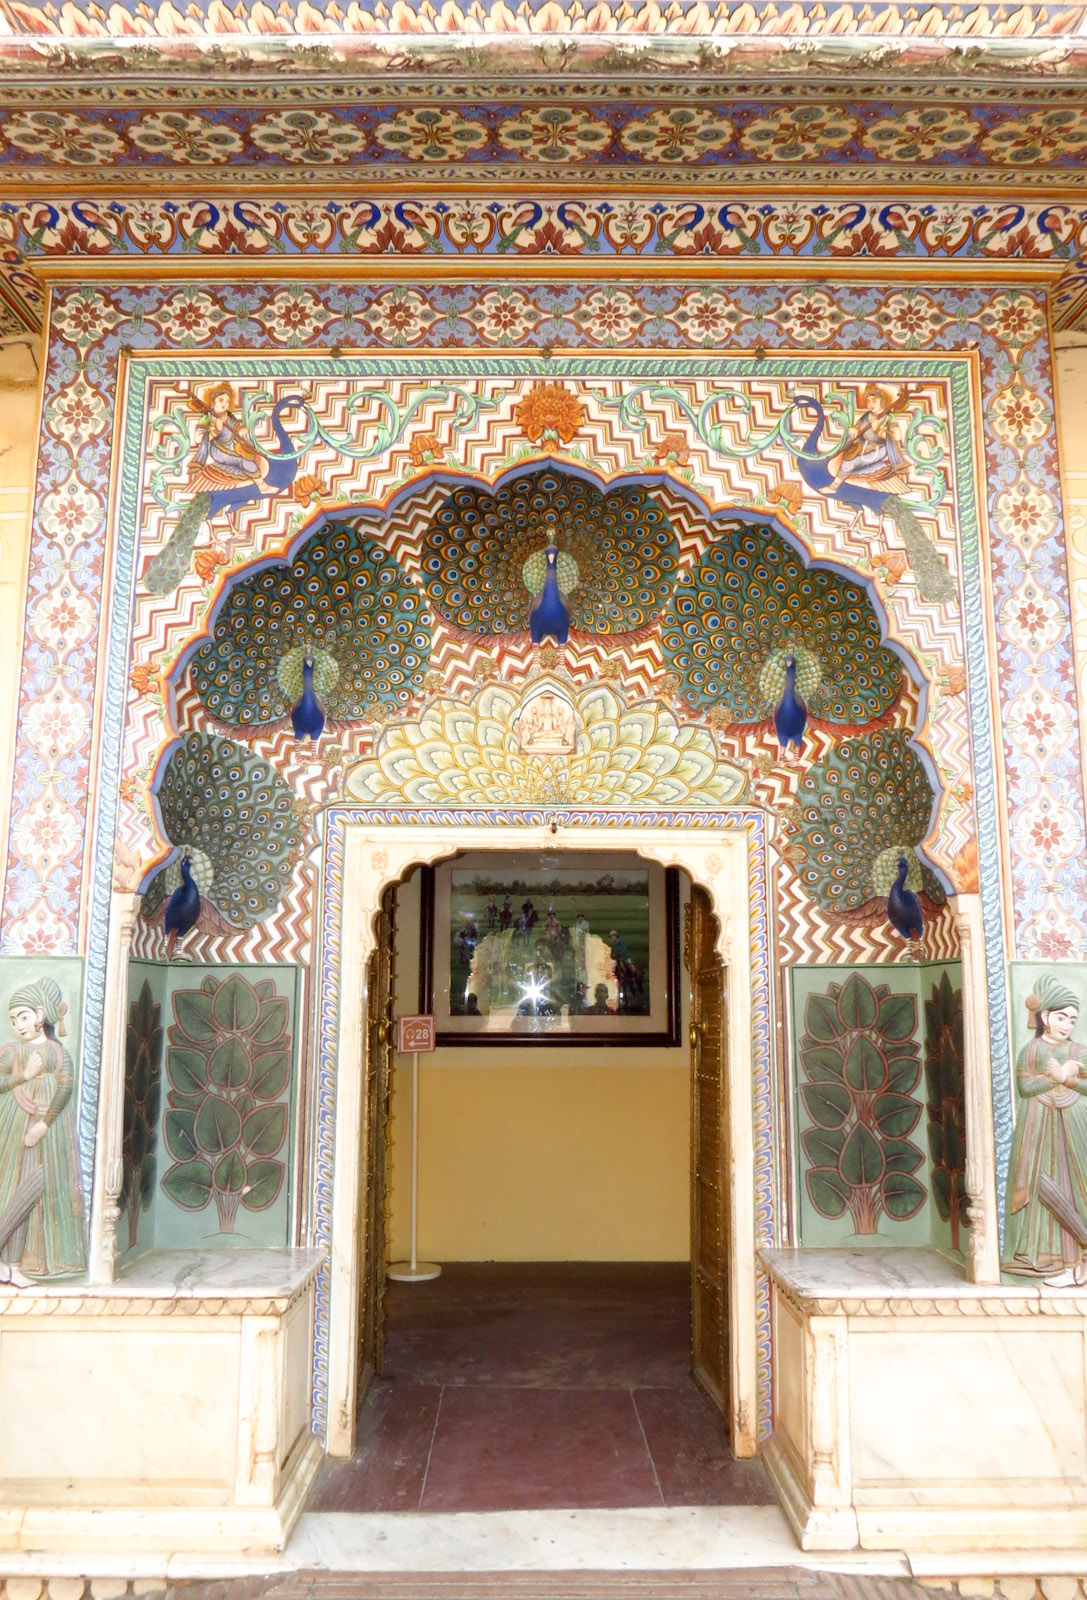 city-palace-peacock-framed-doorway-jaipur